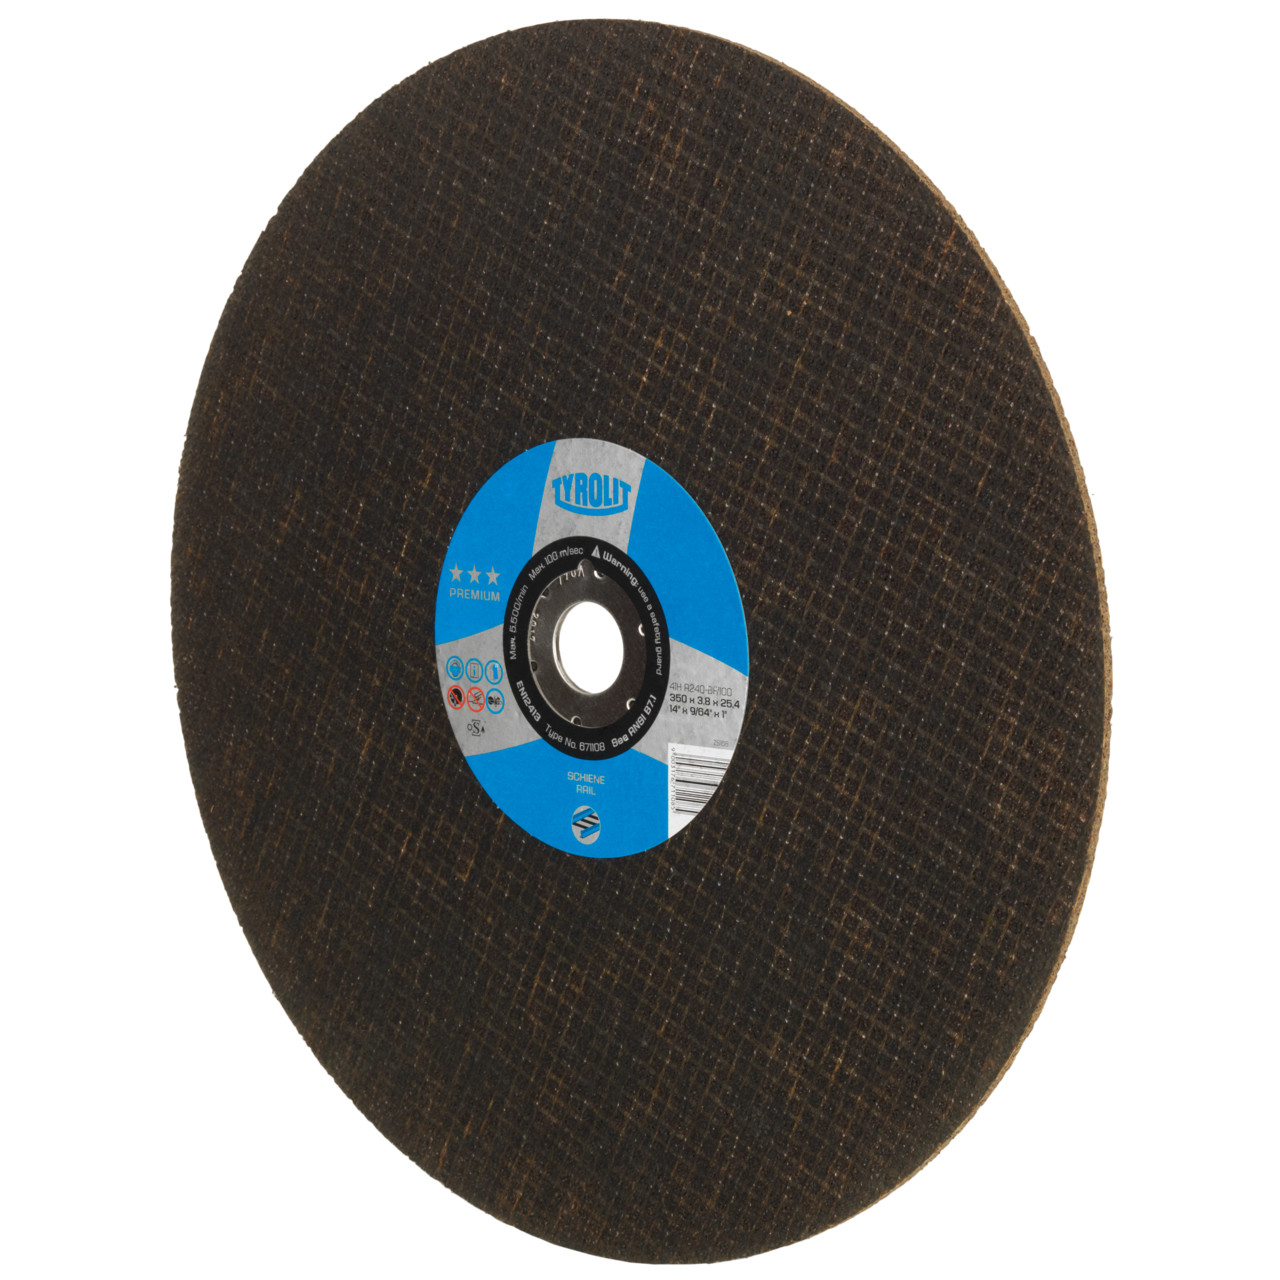 Tyrolit Cutting discs DxDxH 350x3.8x25.4 For rails, shape: 41 - straight version, Art. 671108